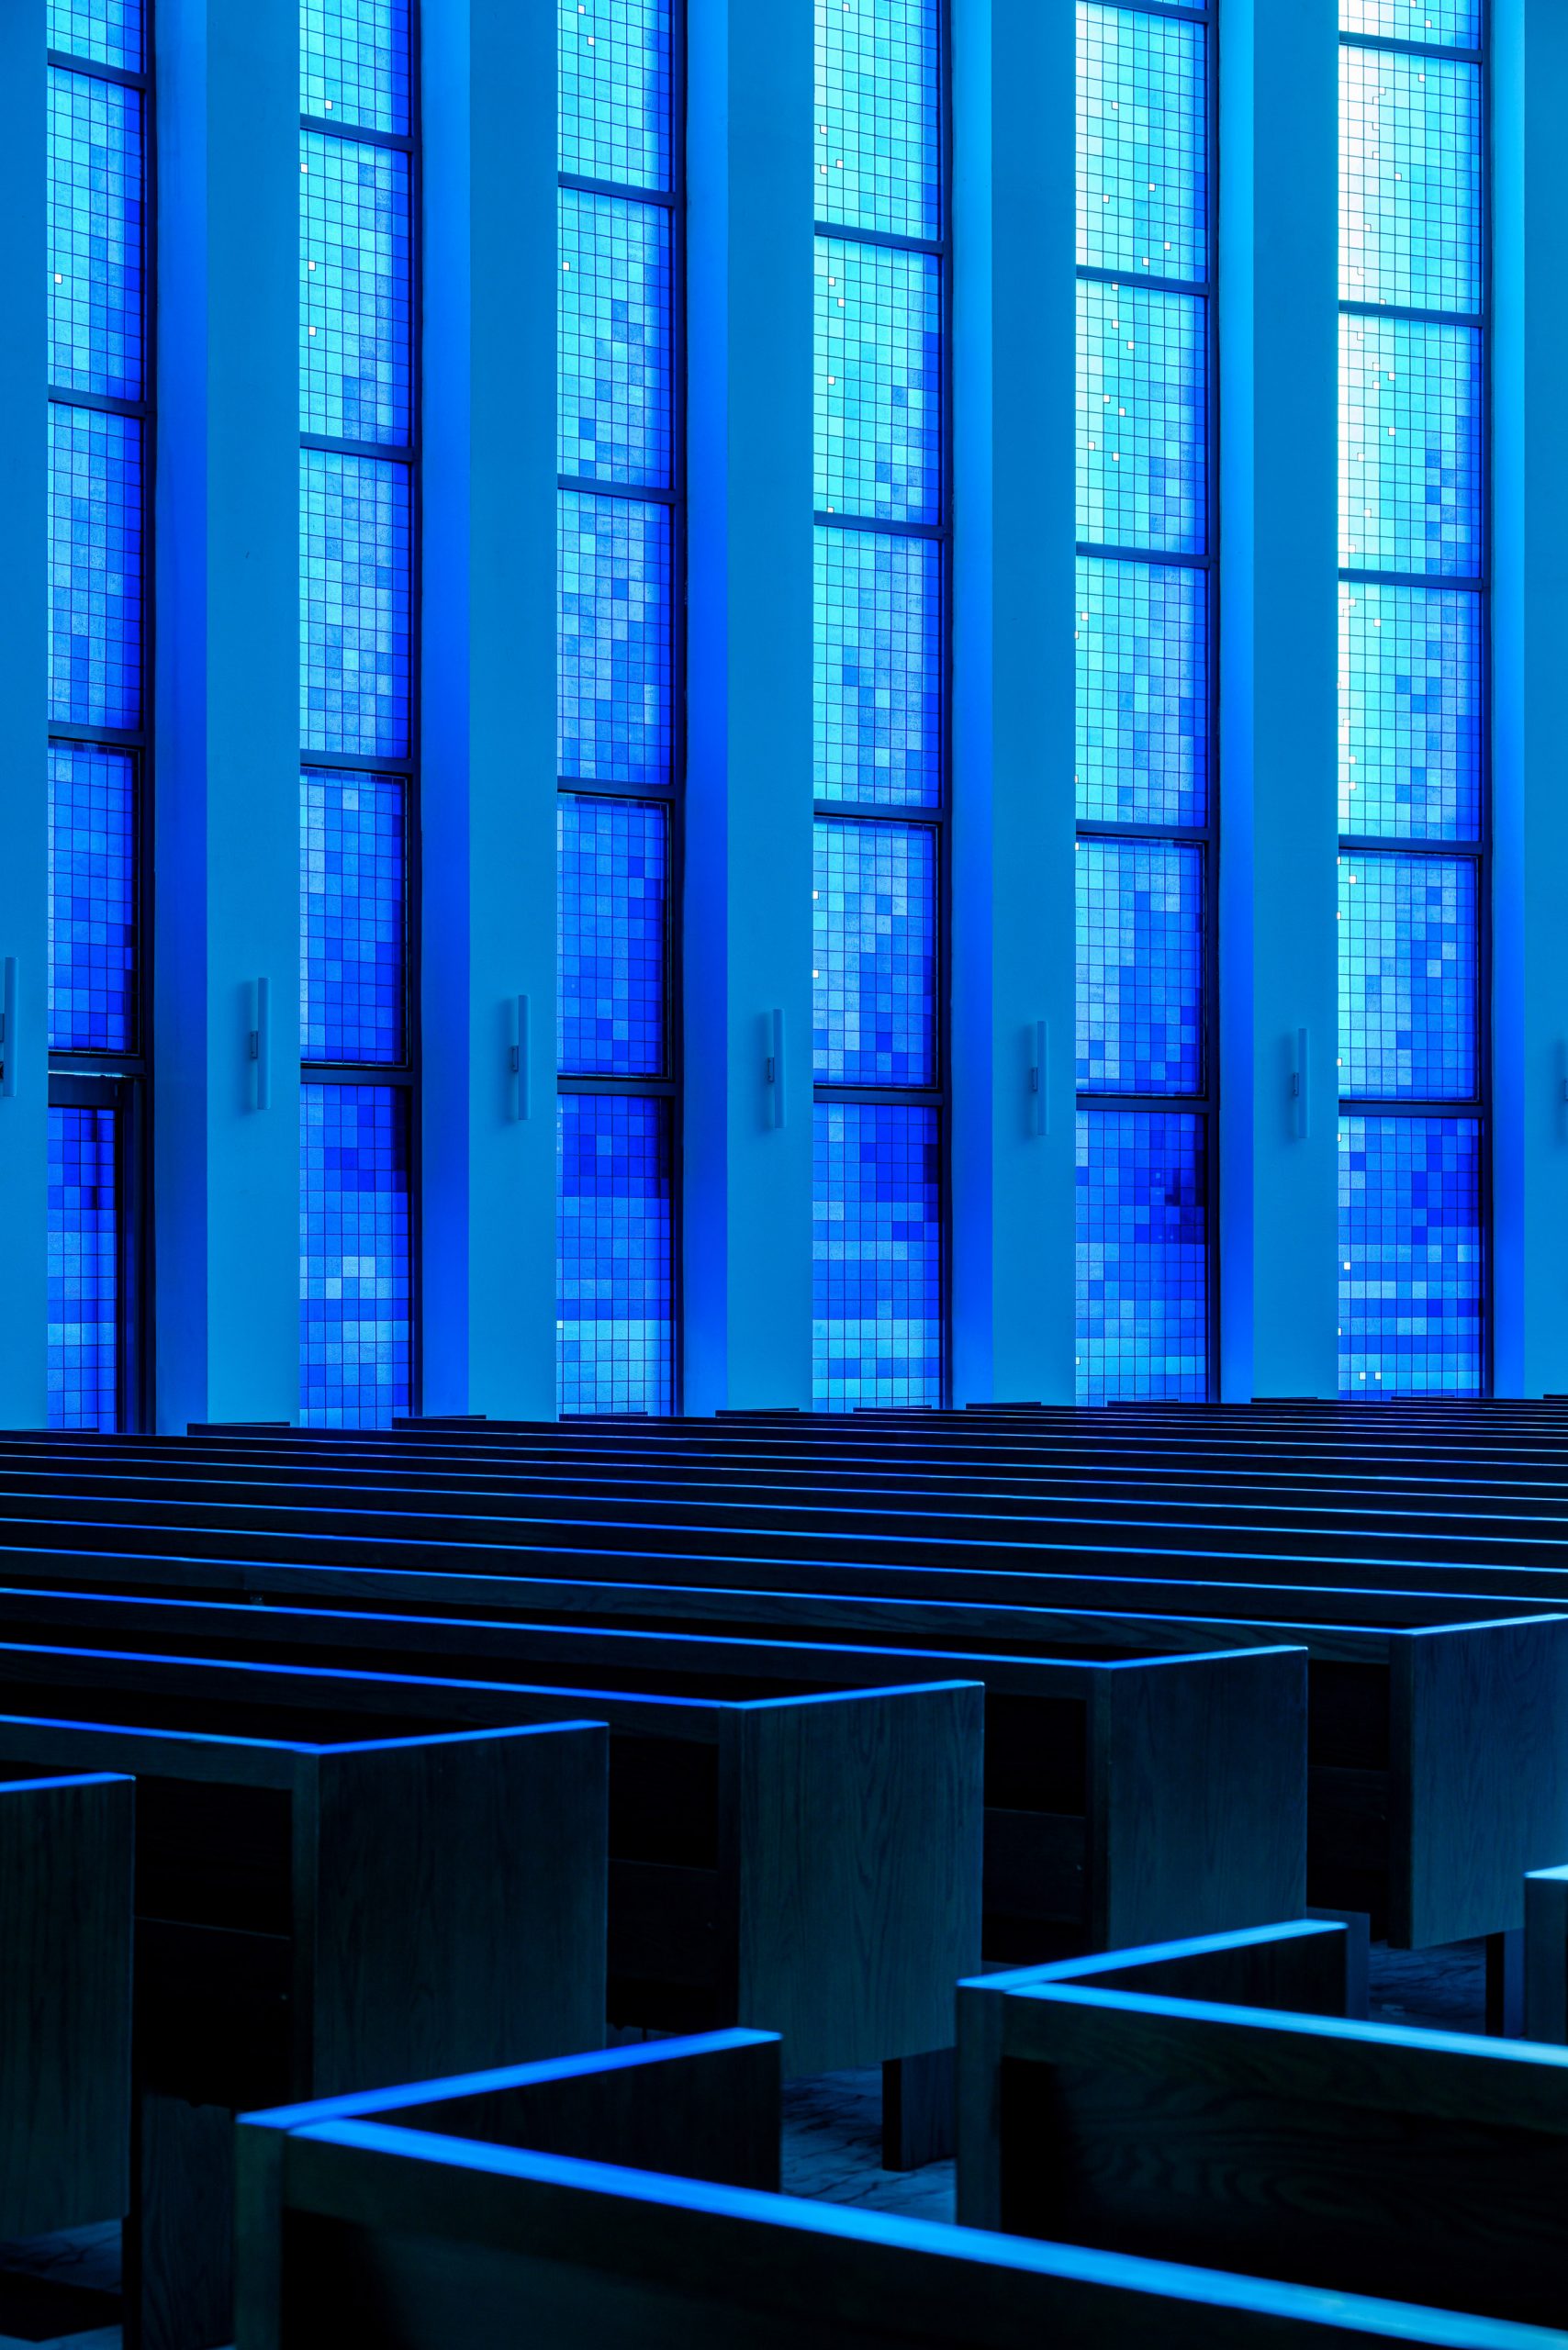 The church's main hall is illuminated by blue light